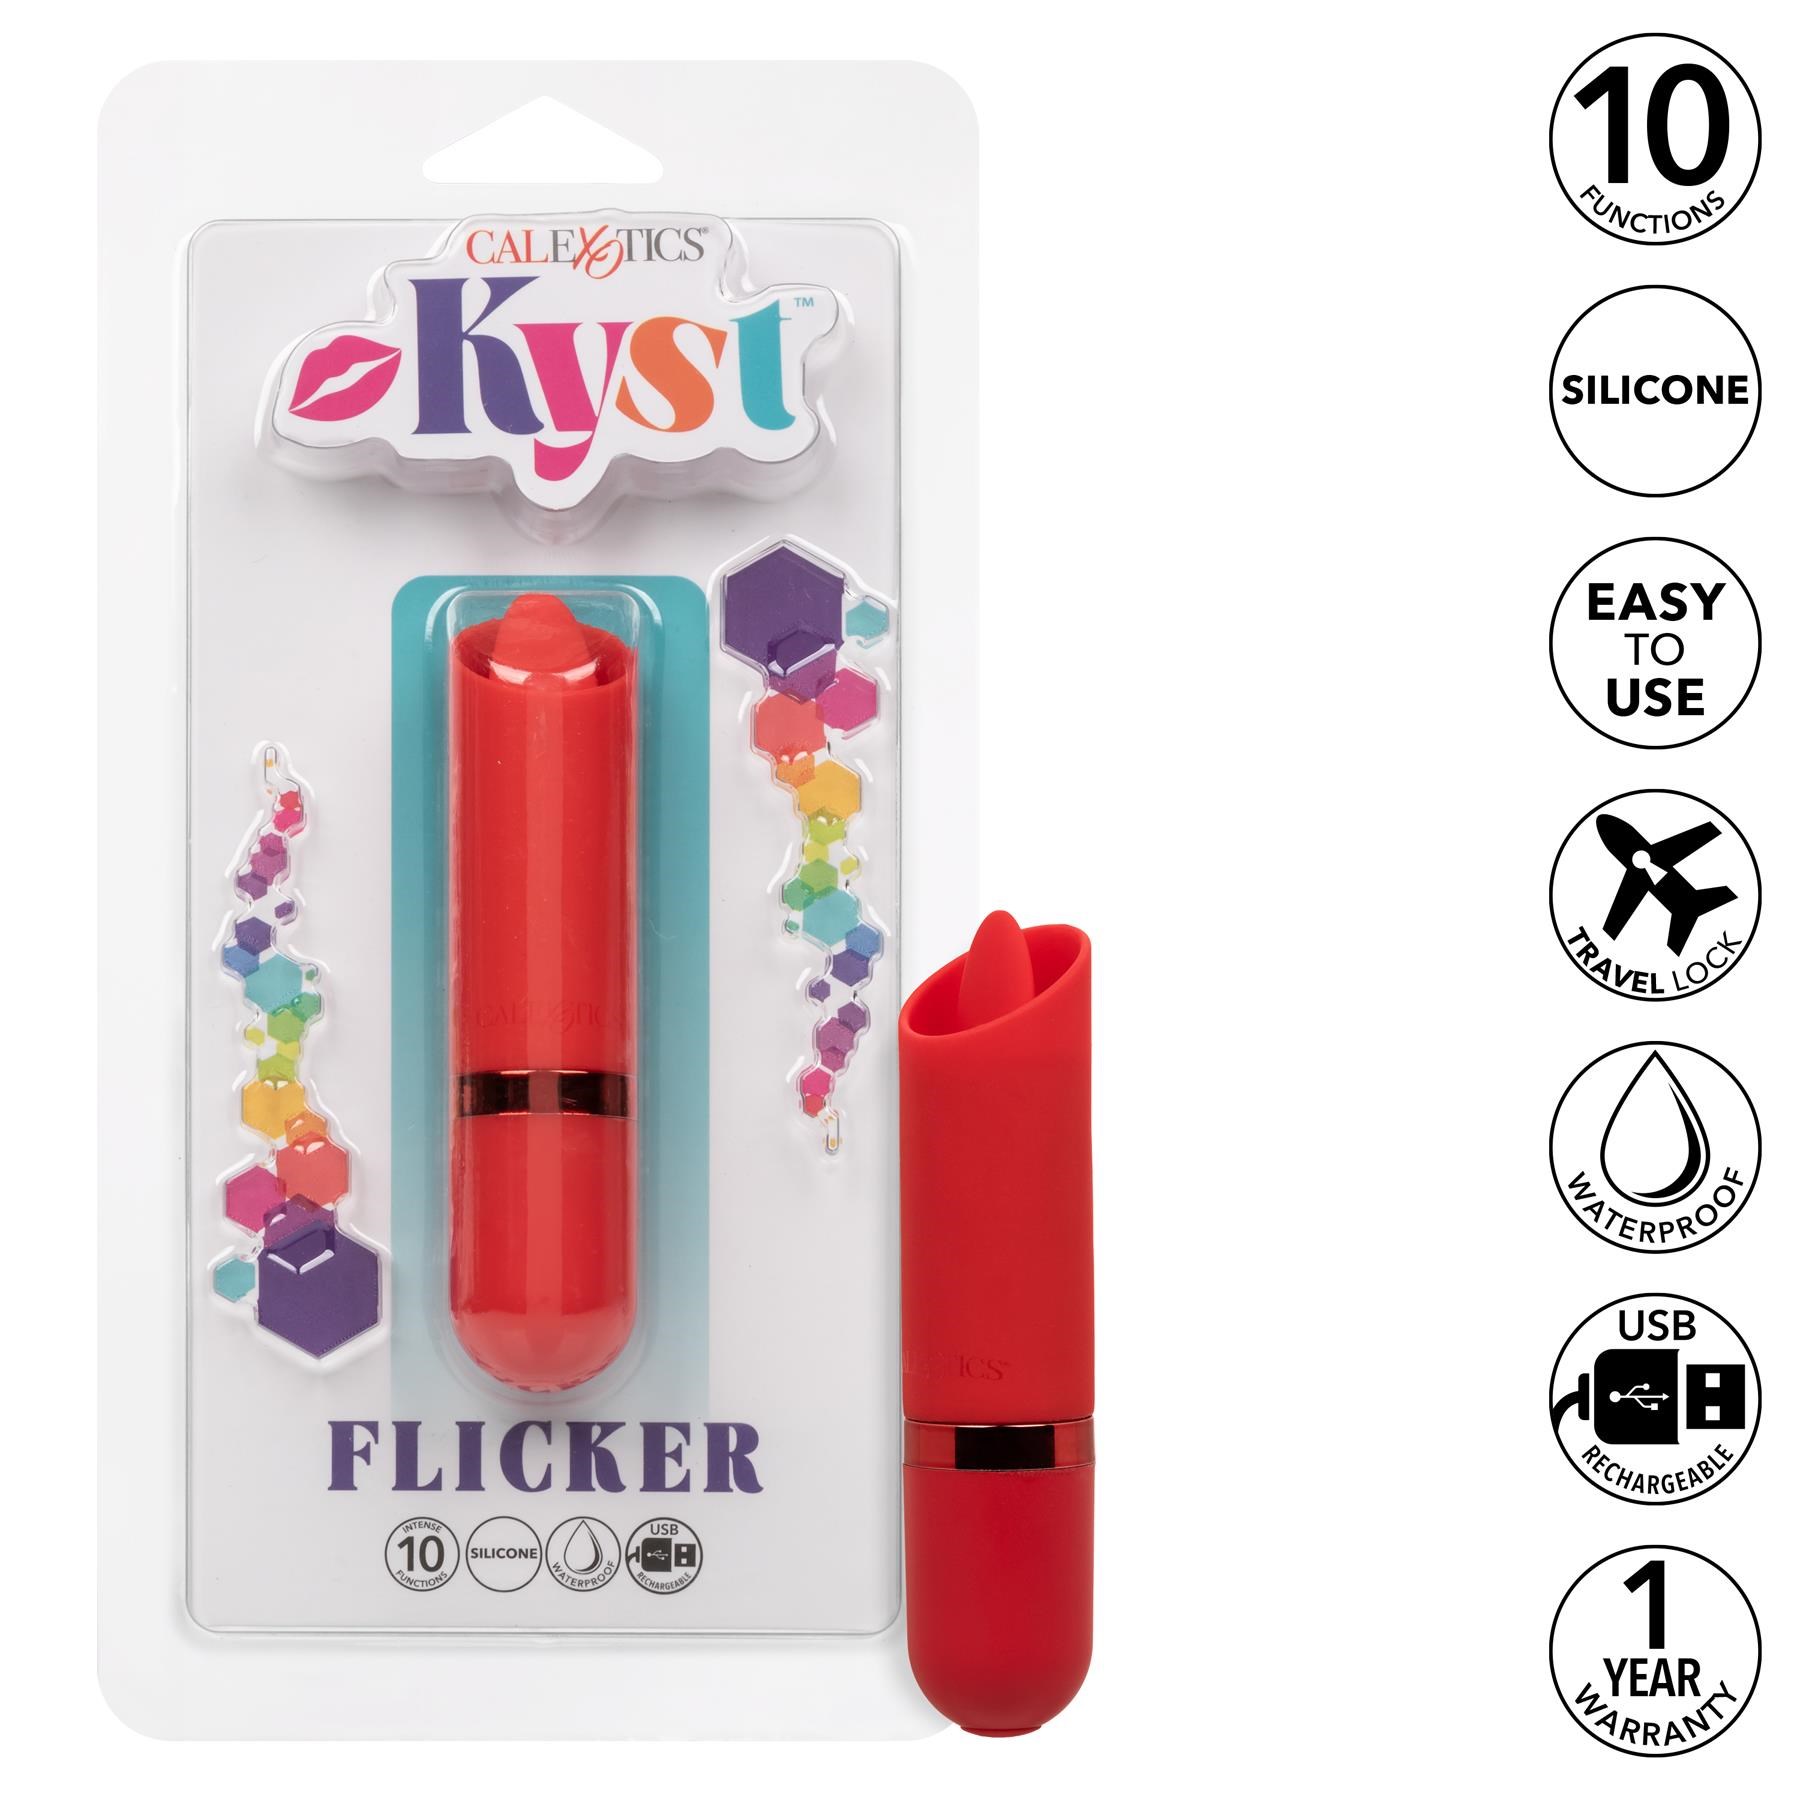 Kyst Flicker Clitoral Stimulator - Features